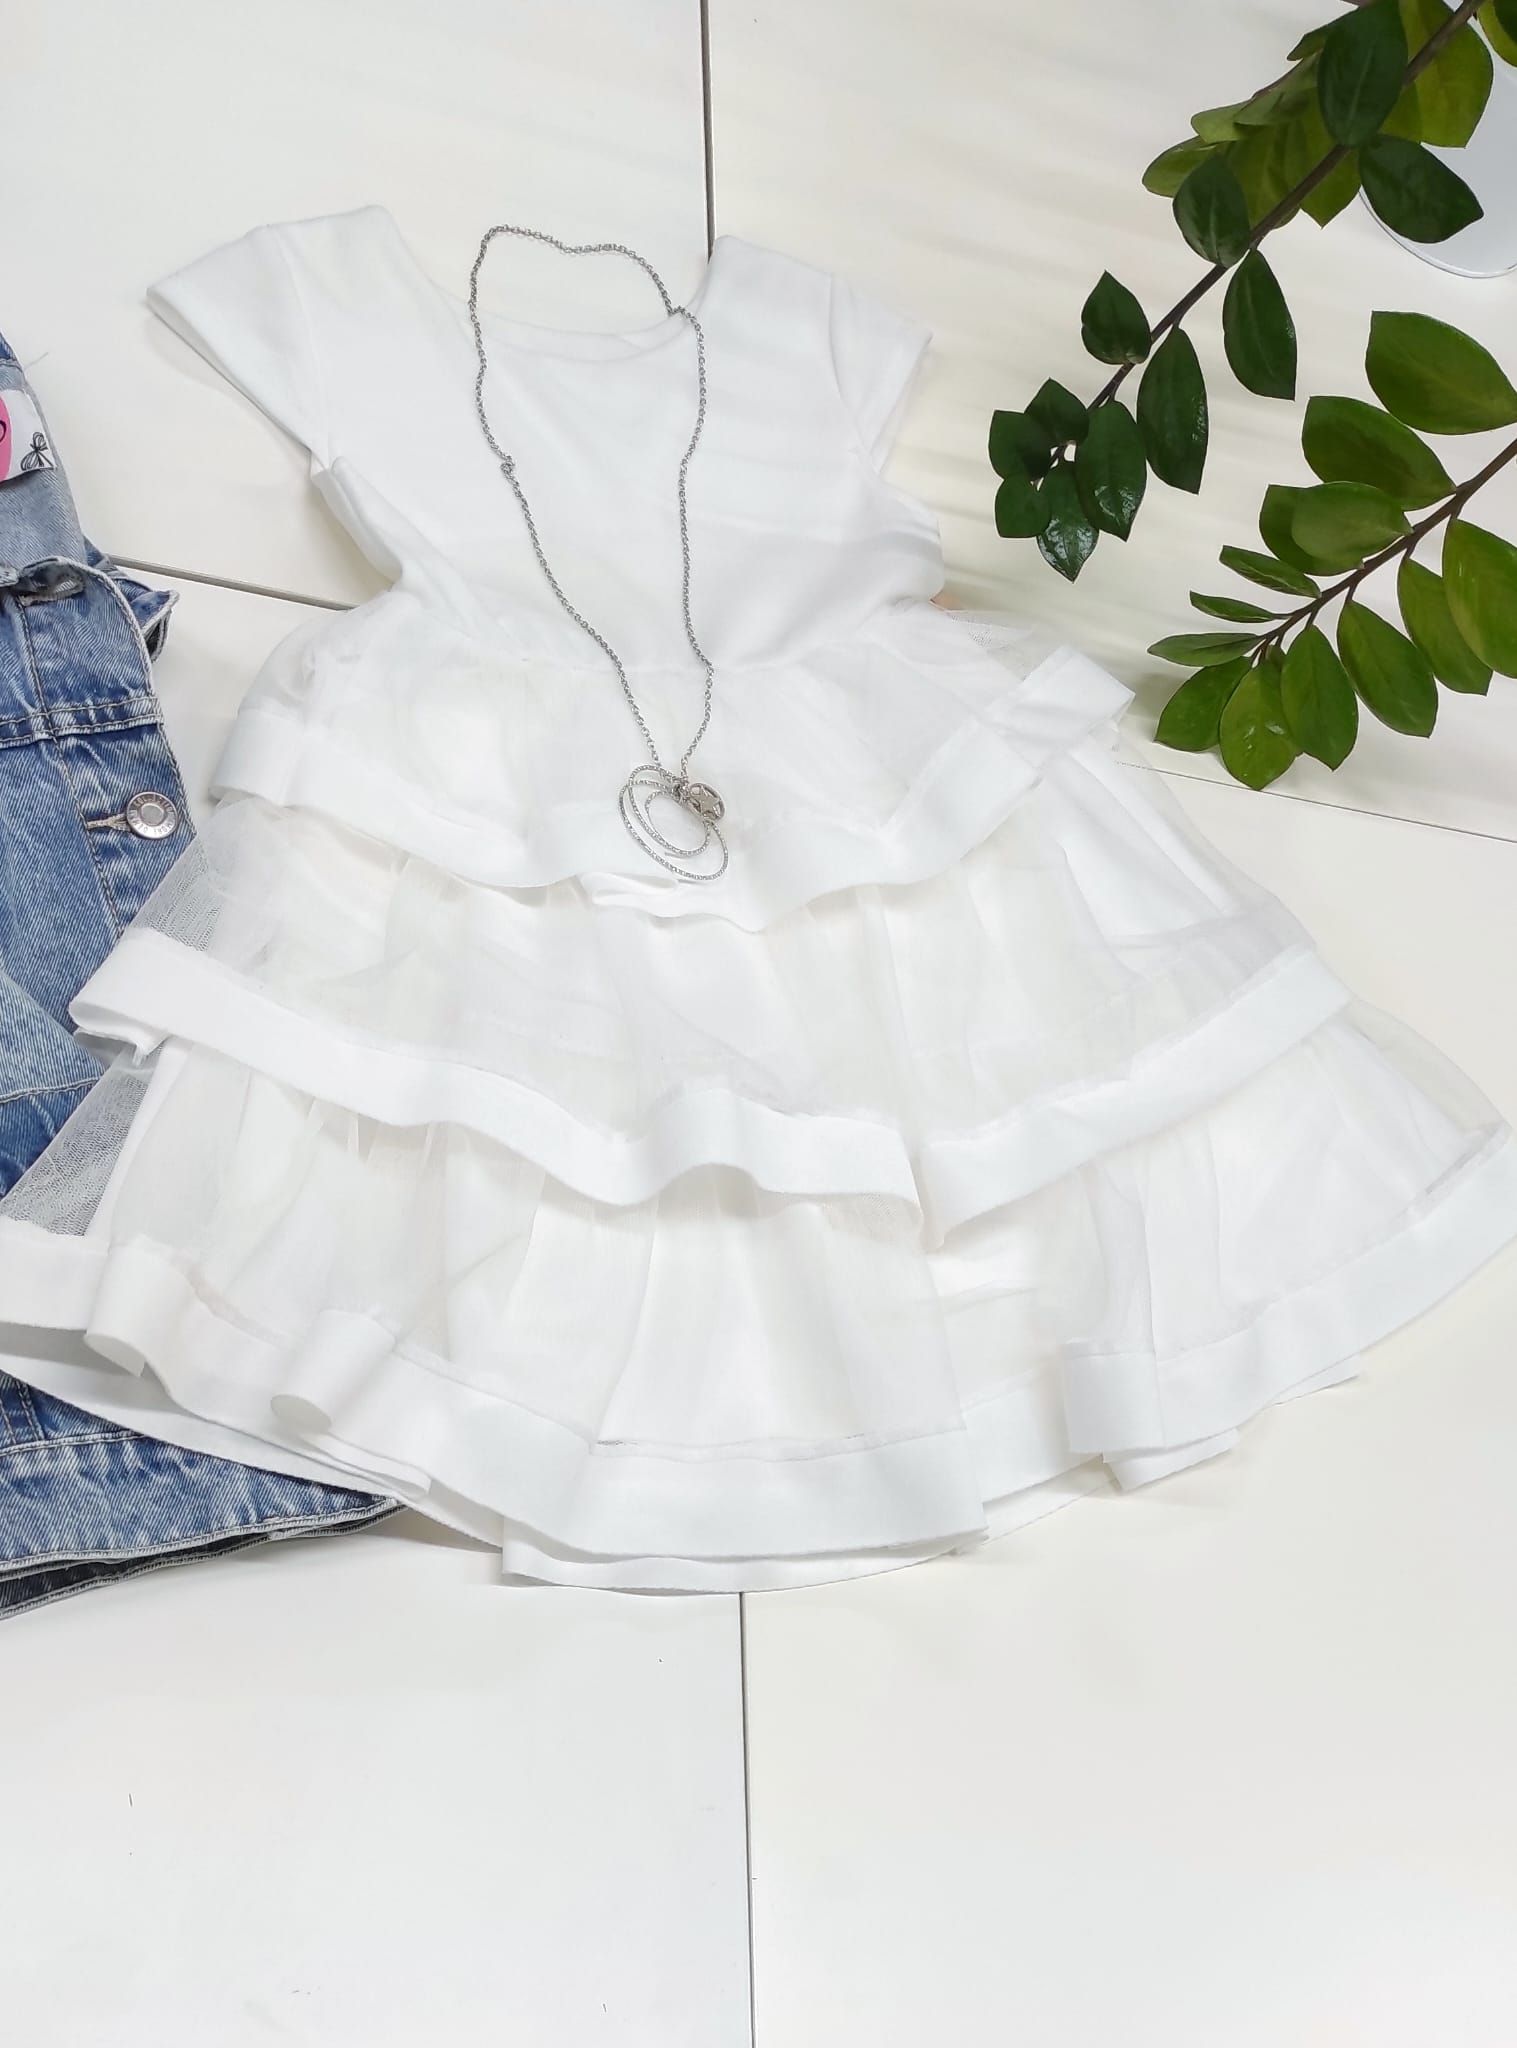 Šaty KLER, biele (4 - 14 rokov) 